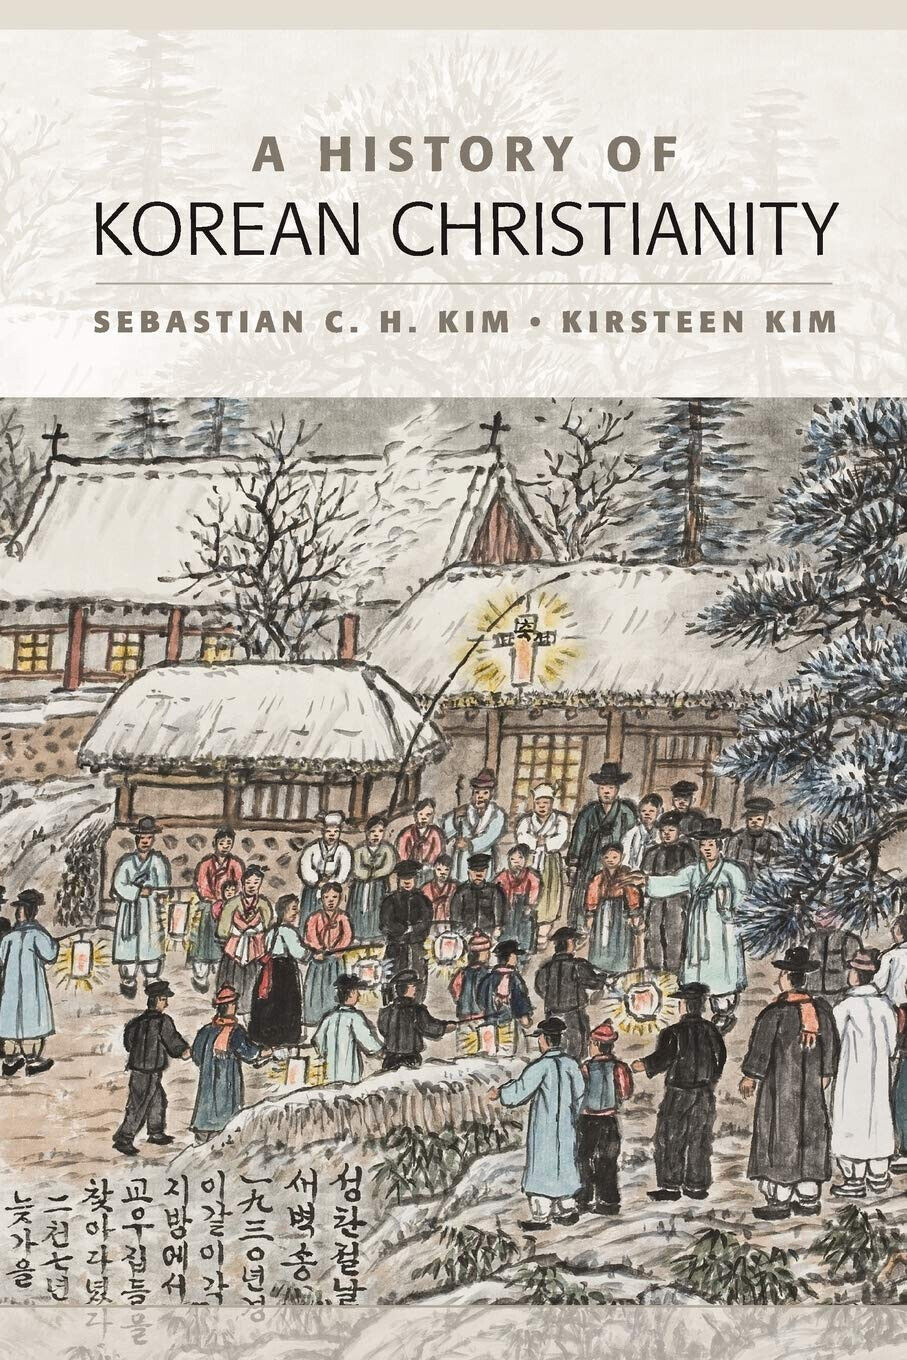 A History of Korean Christianity - Sebastian C. H. Kim, Kirsteen Kim - 2022